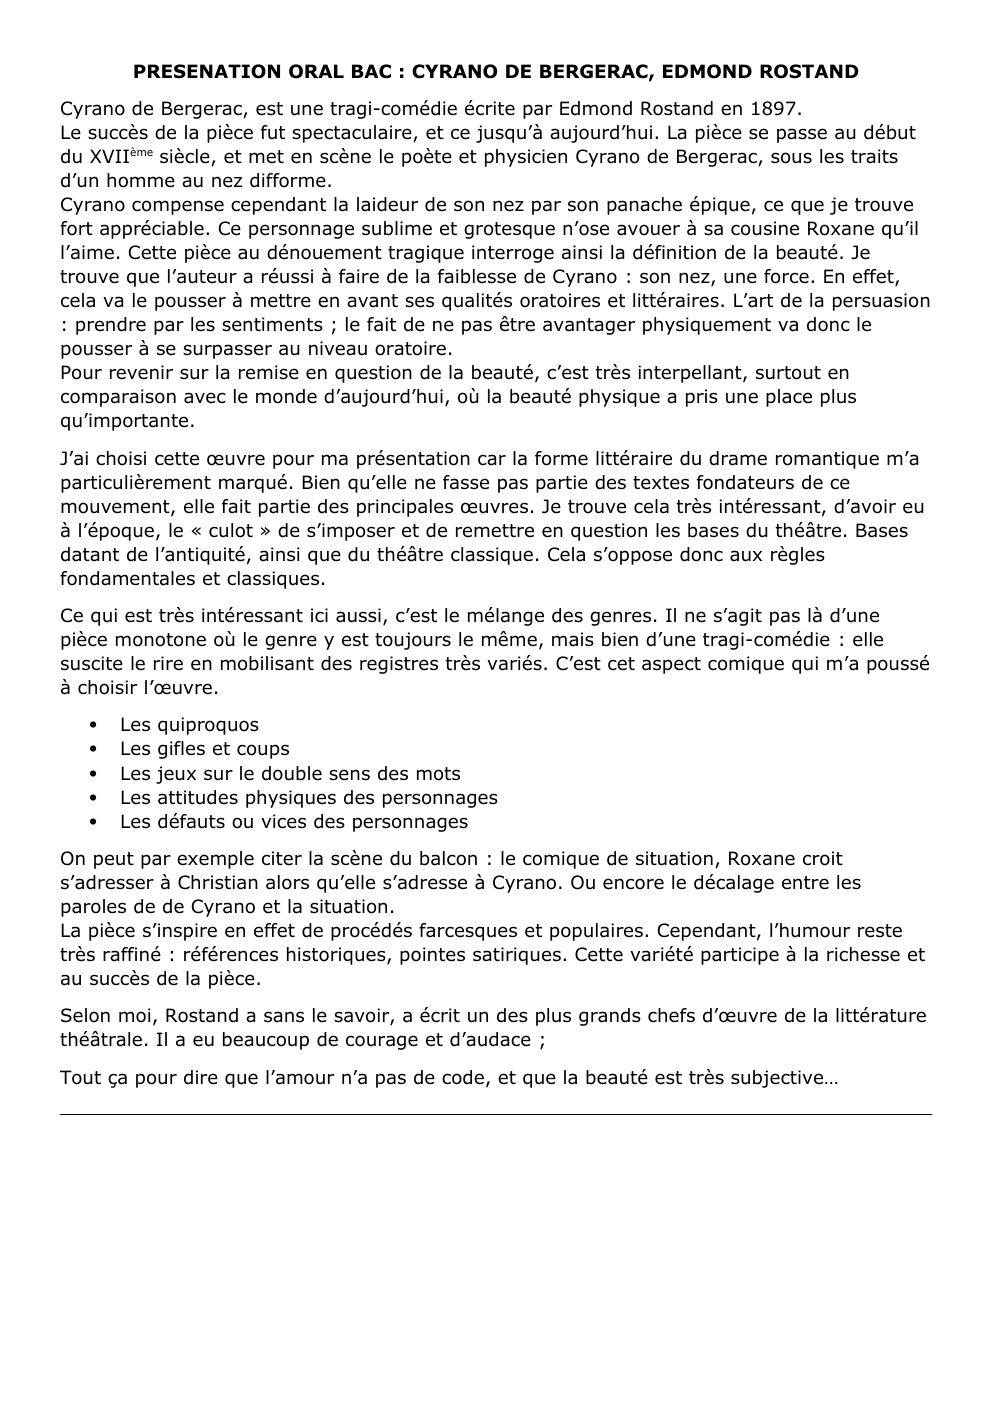 Prévisualisation du document ORAL BAC DE FRANCAIS: PRESENATION ORAL BAC : CYRANO DE BERGERAC, EDMOND ROSTAND